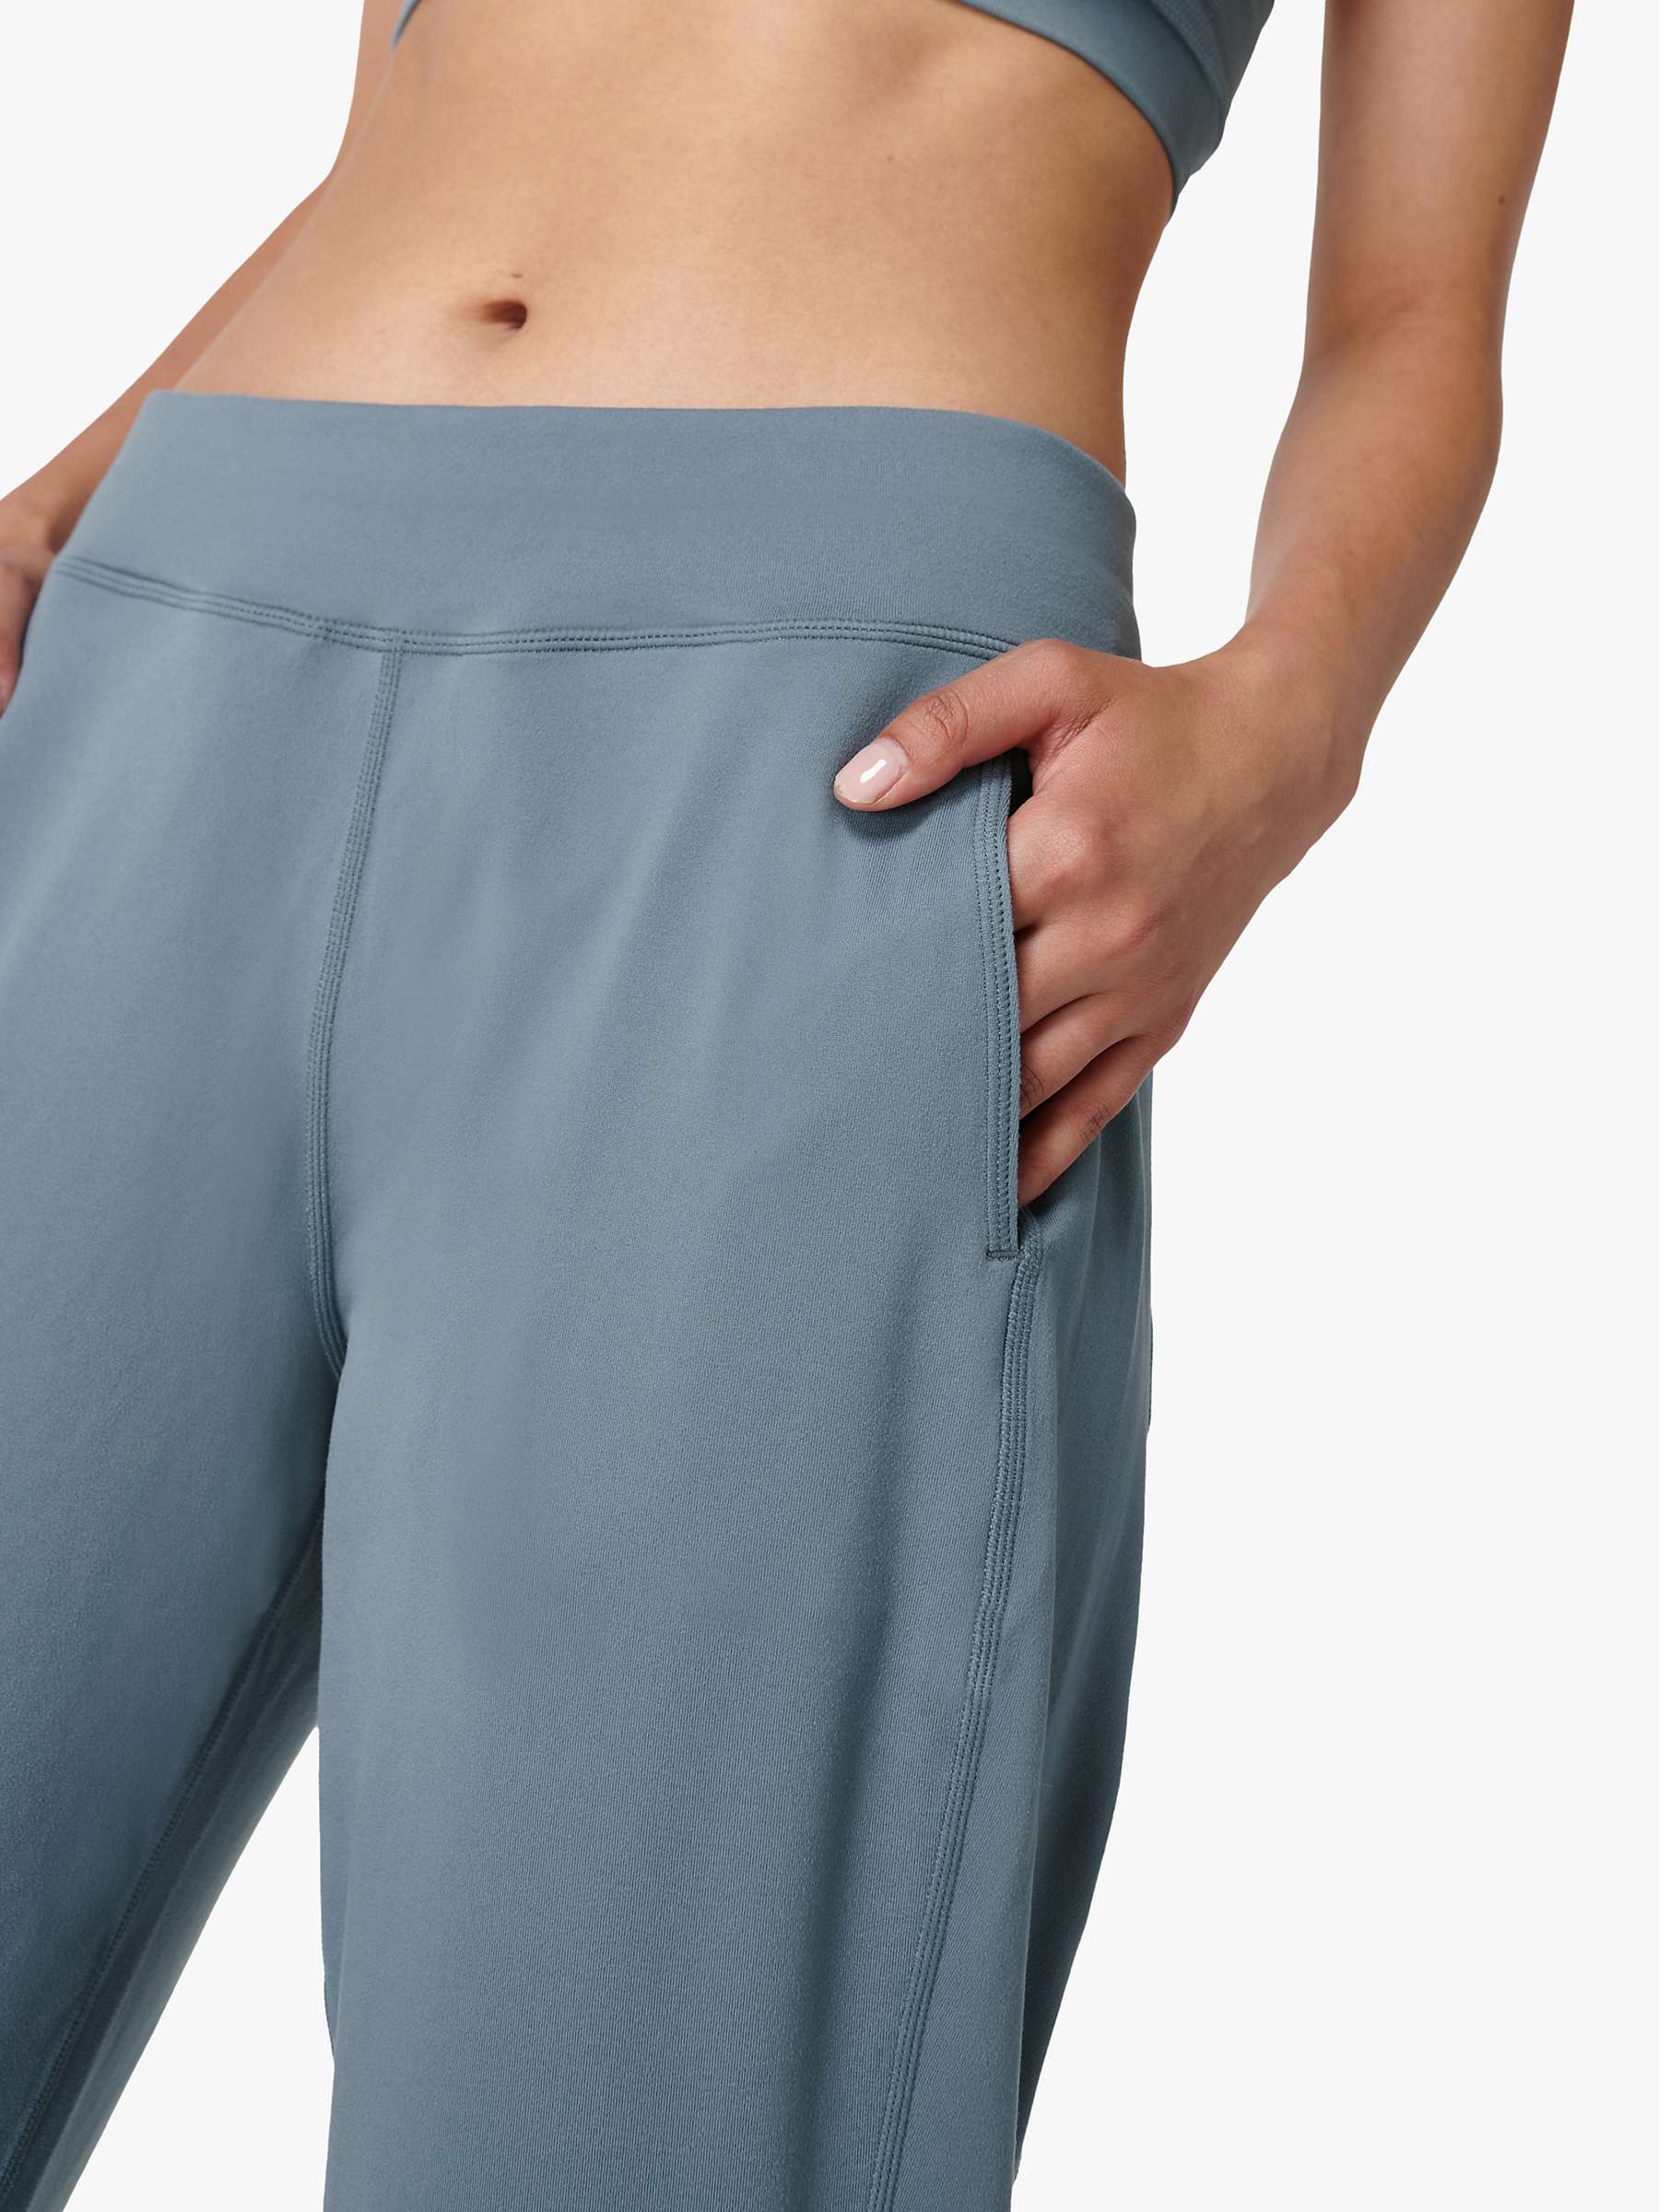 Buy Sweaty Betty Gary 29" Yoga Pants Online at johnlewis.com